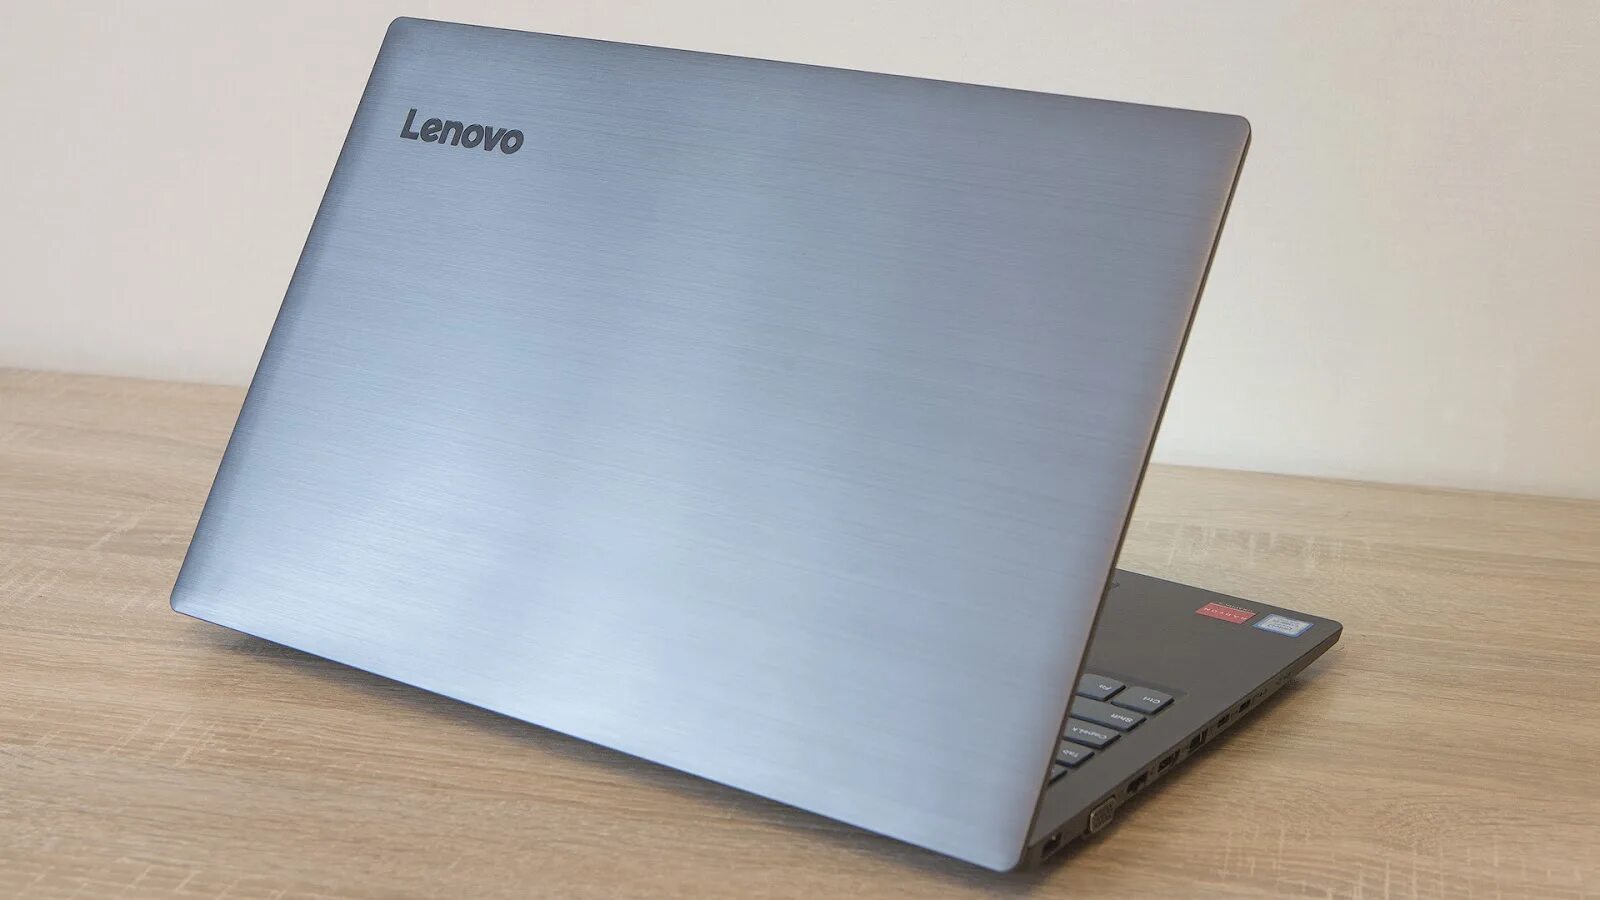 Рабочий ноутбук леново. Ноутбук Lenovo v330 15. Ноутбук Lenovo IDEAPAD 330. Lenovo IDEAPAD 330 15. Ноутбук Lenovo 330-15ich.